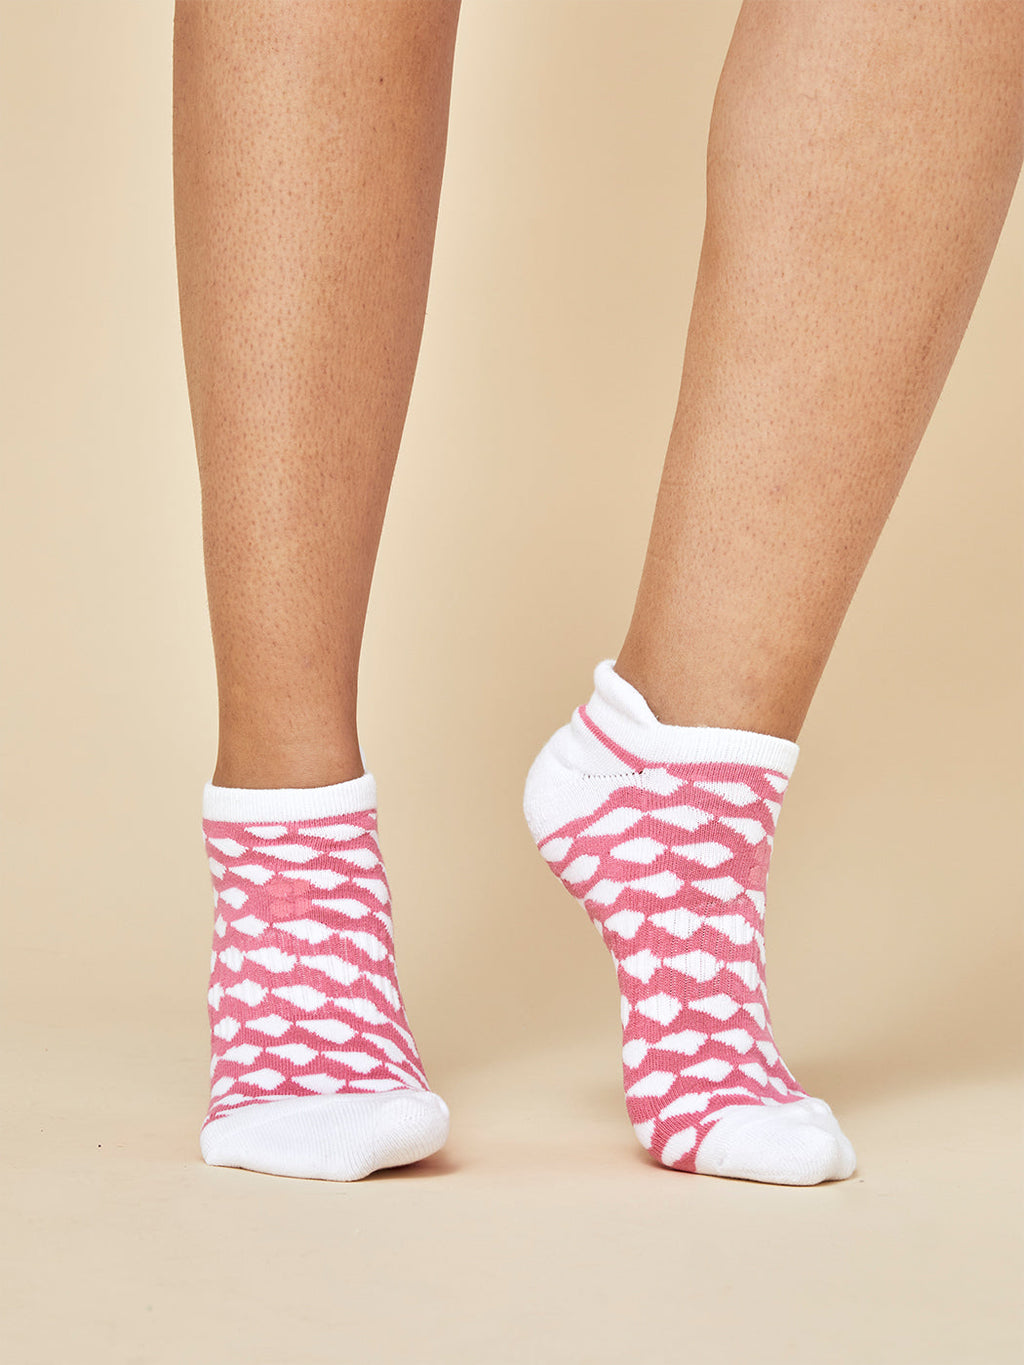 Workout Trainer Socks 3 Pack - Beet Pink, Women's Sports Socks